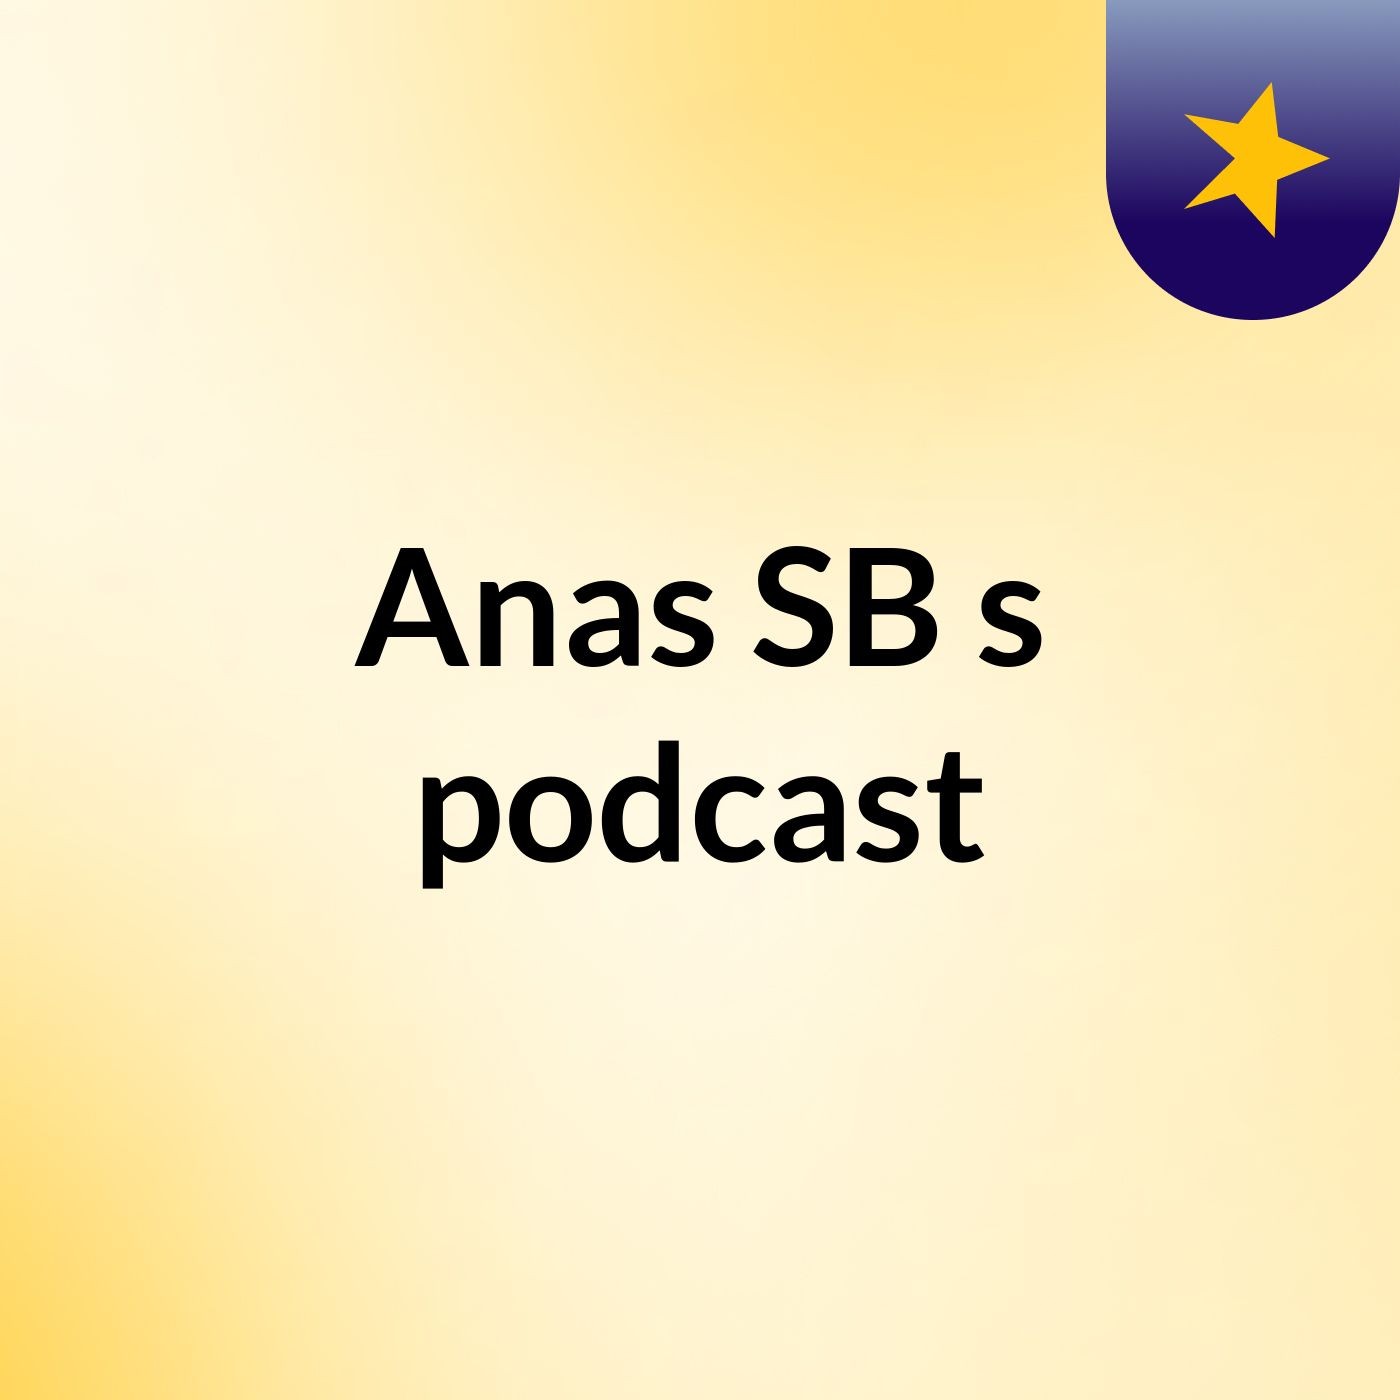 Anas SB's podcast